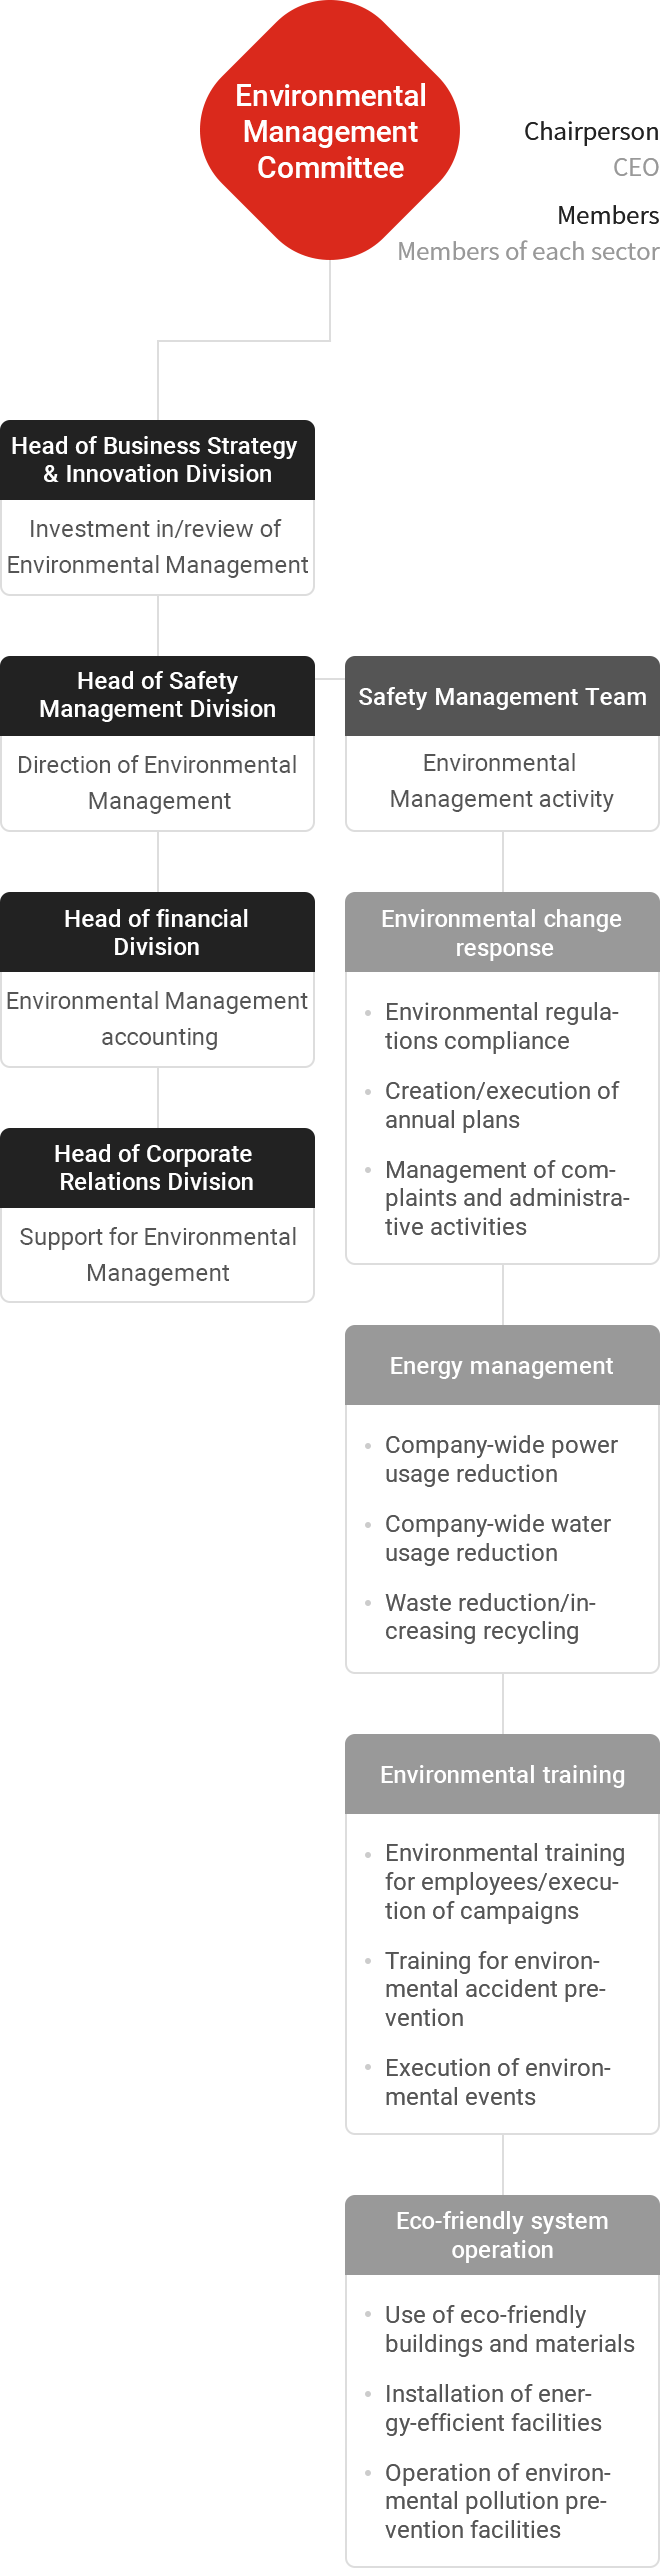 Organization of Environmental Management